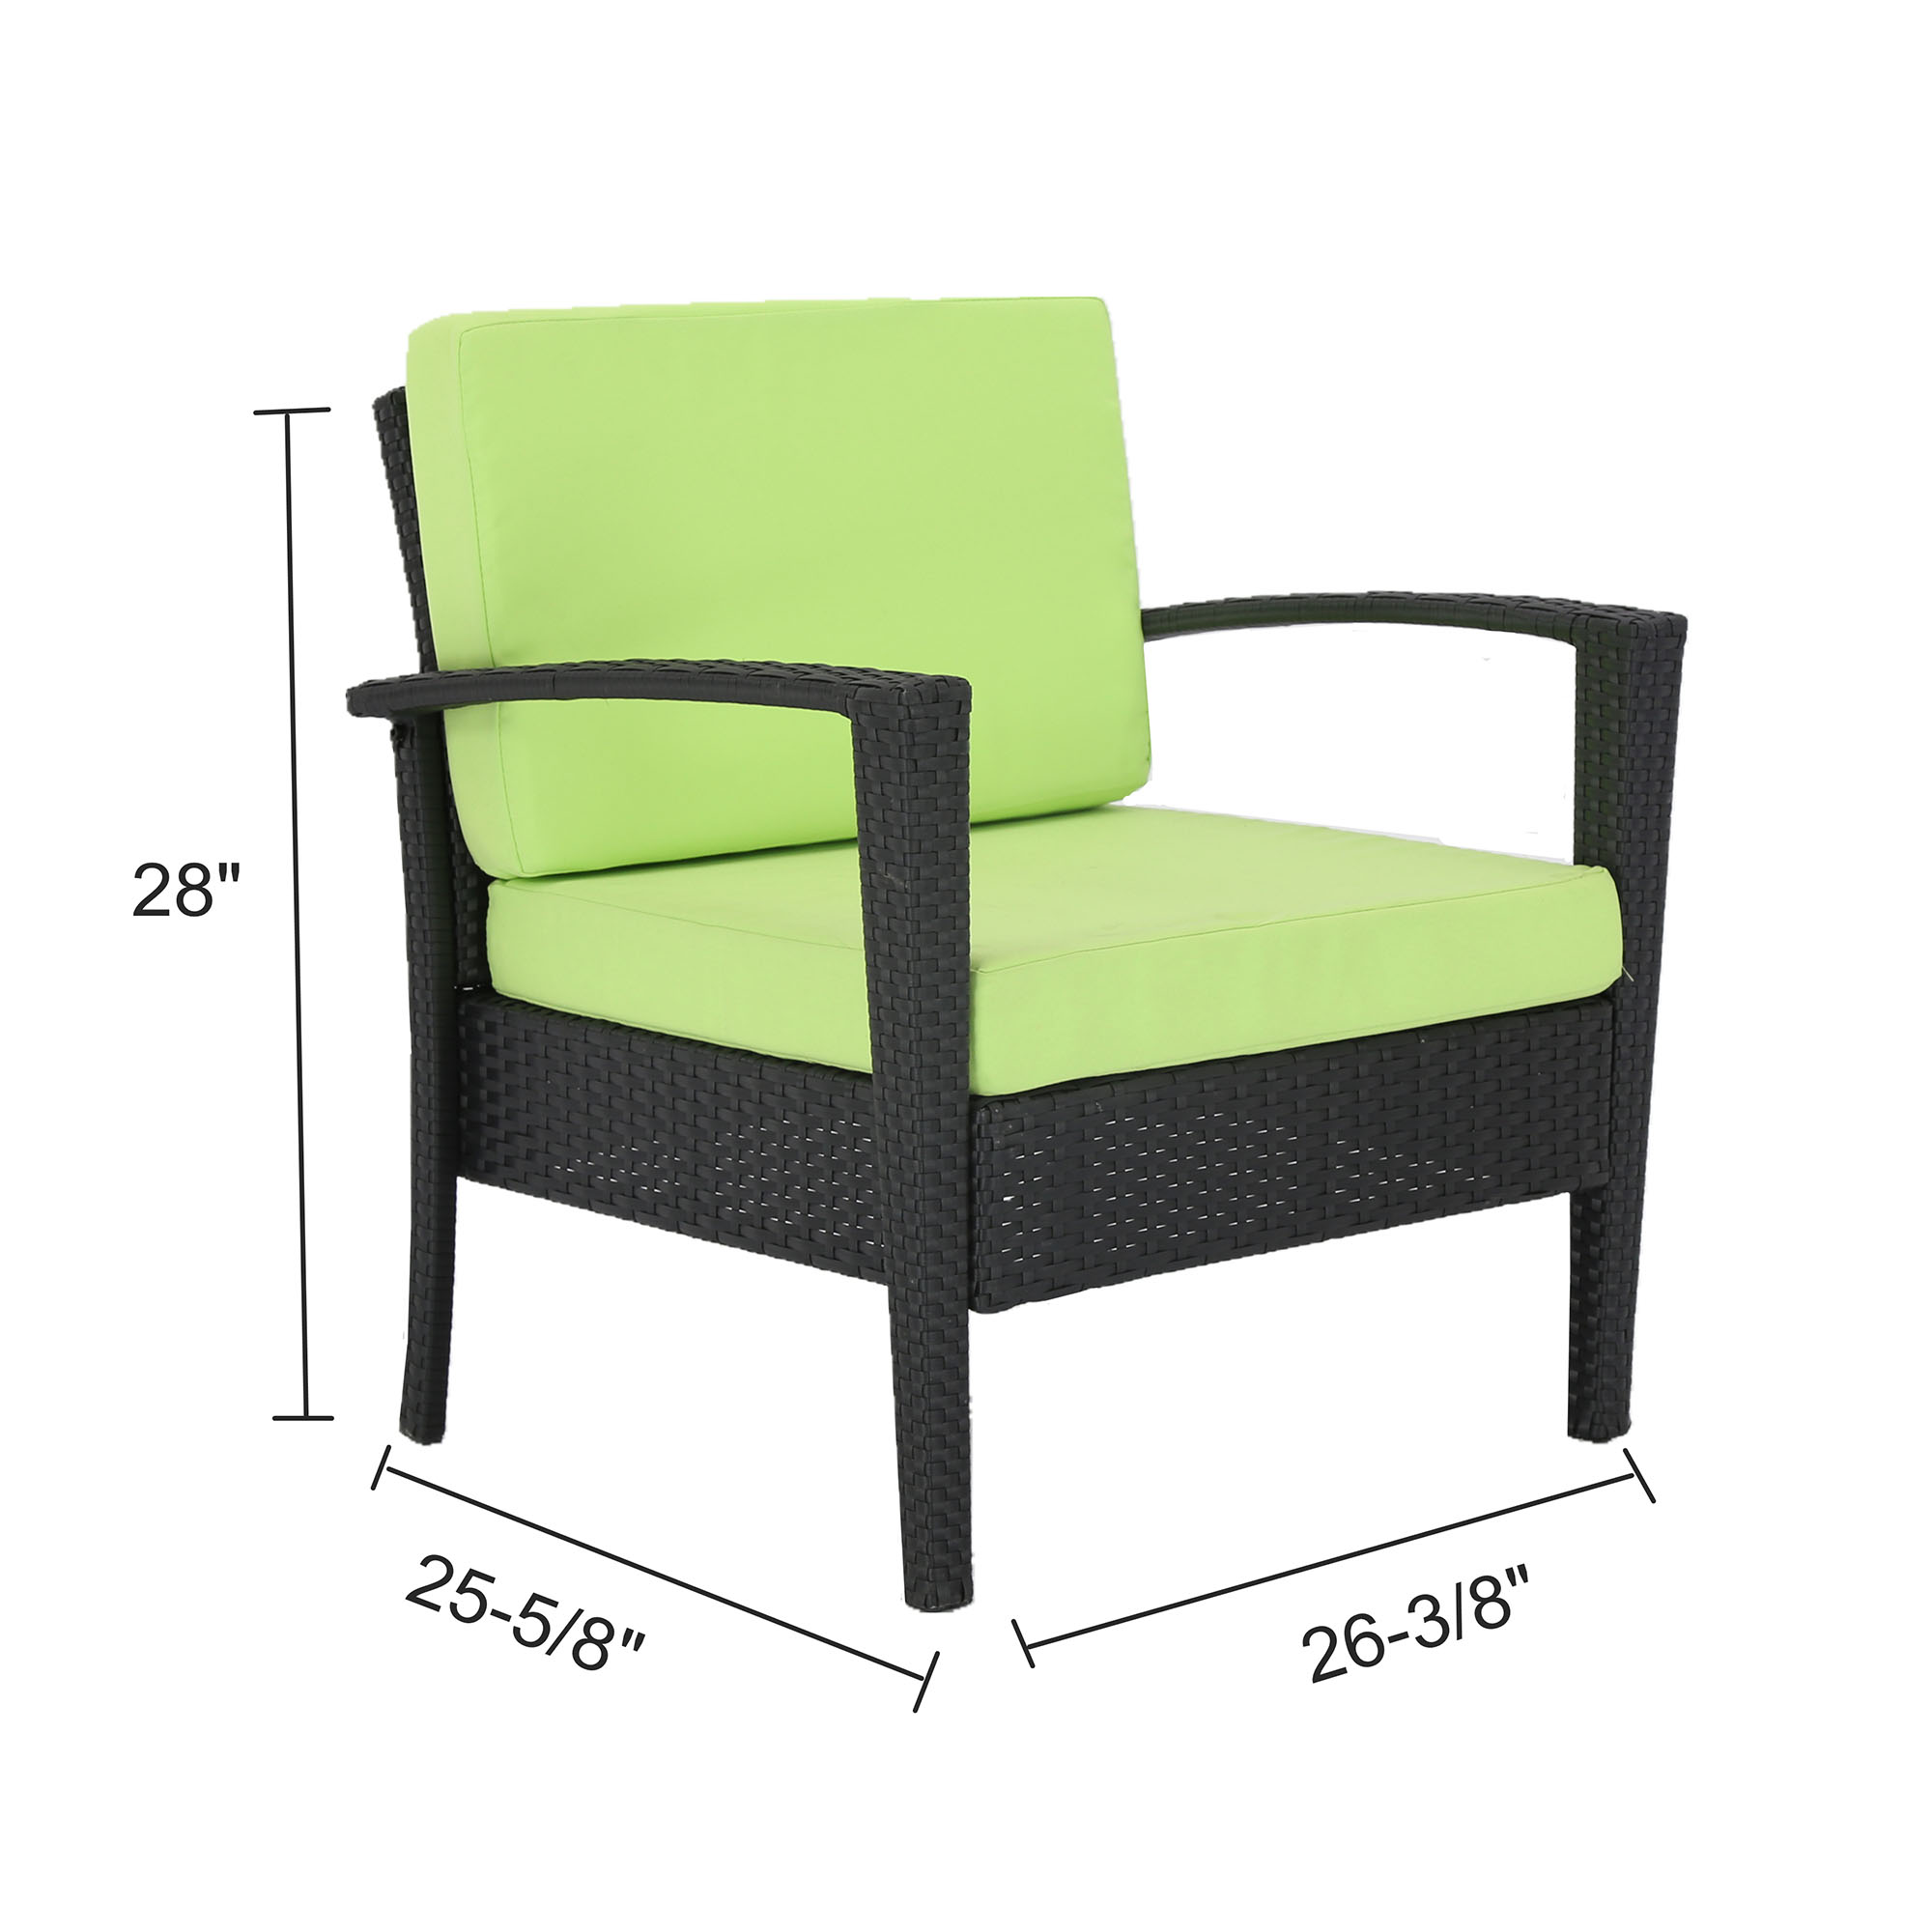 Baner Garden Wicker 4 Piece Black Patio Conversation Set with Green Cushions - image 2 of 11